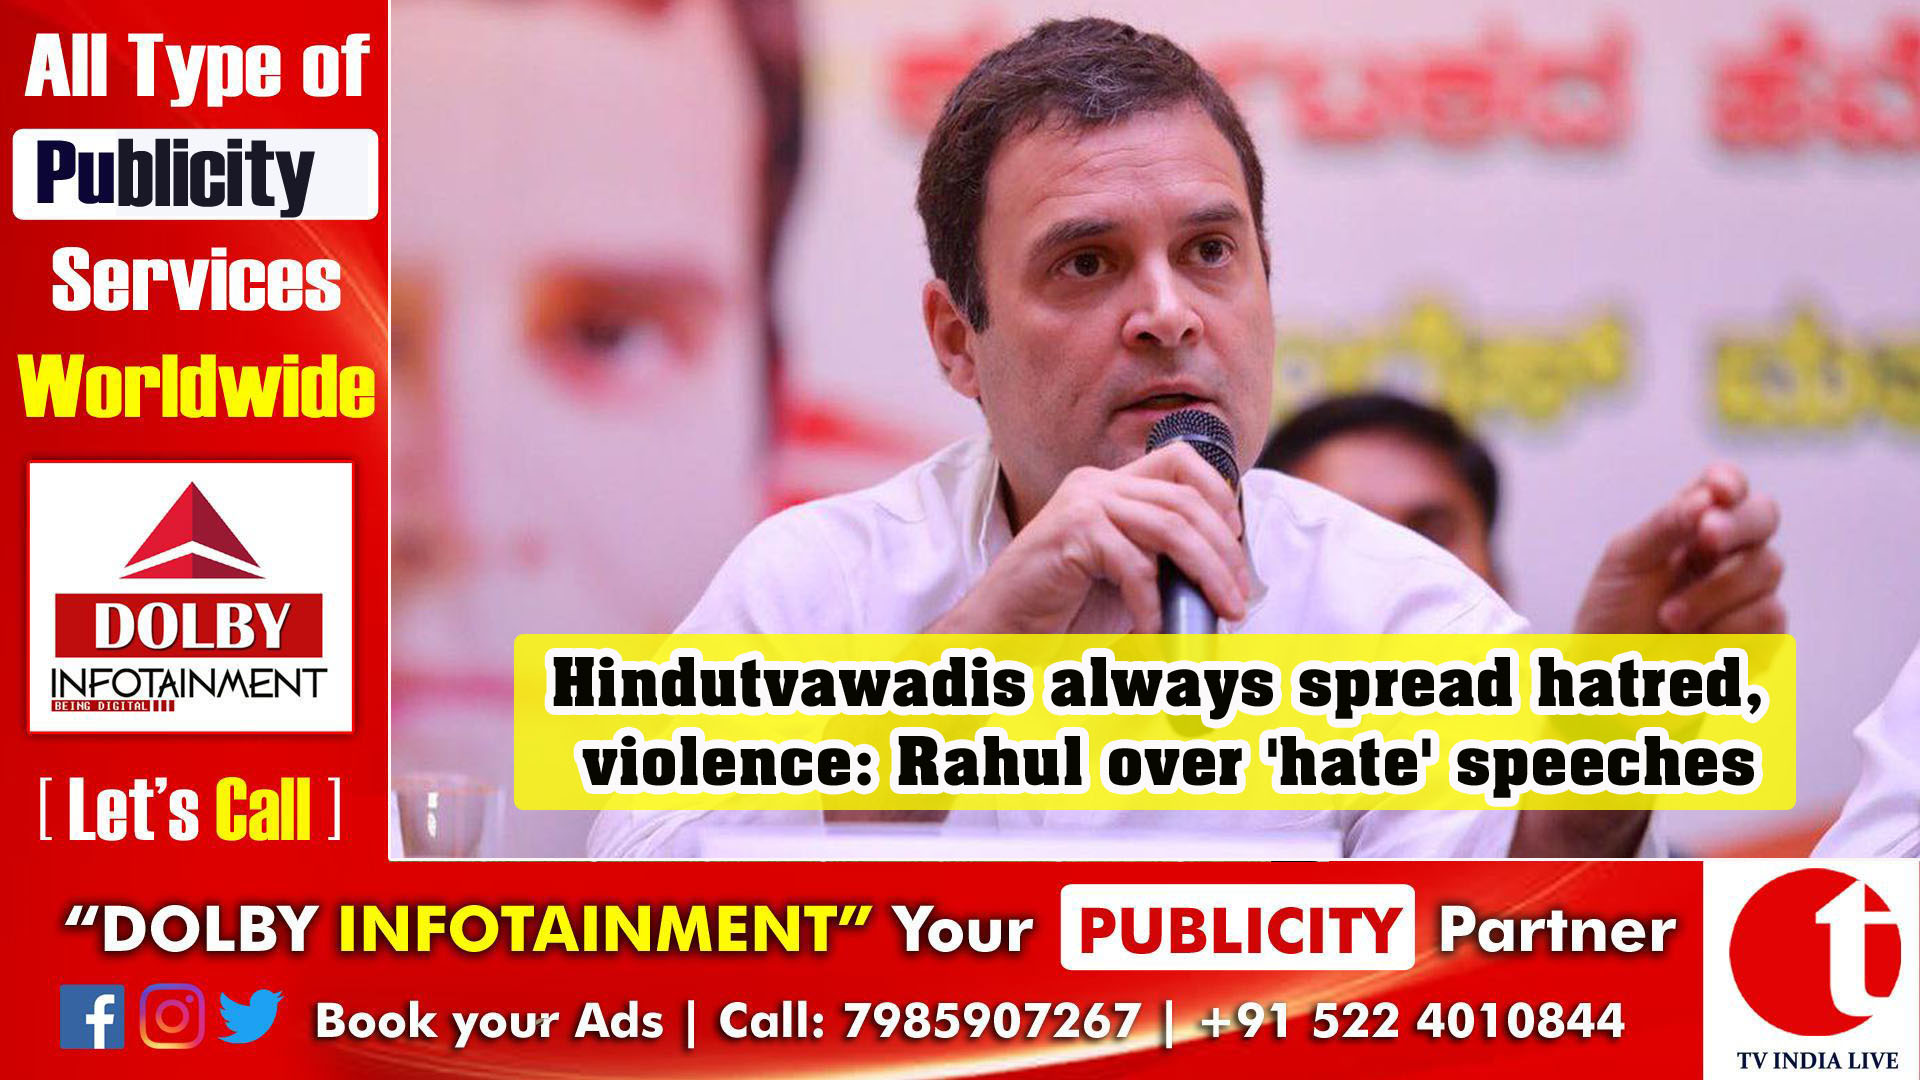 Hindutvawadis always spread hatred, violence: Rahul over 'hate' speeches